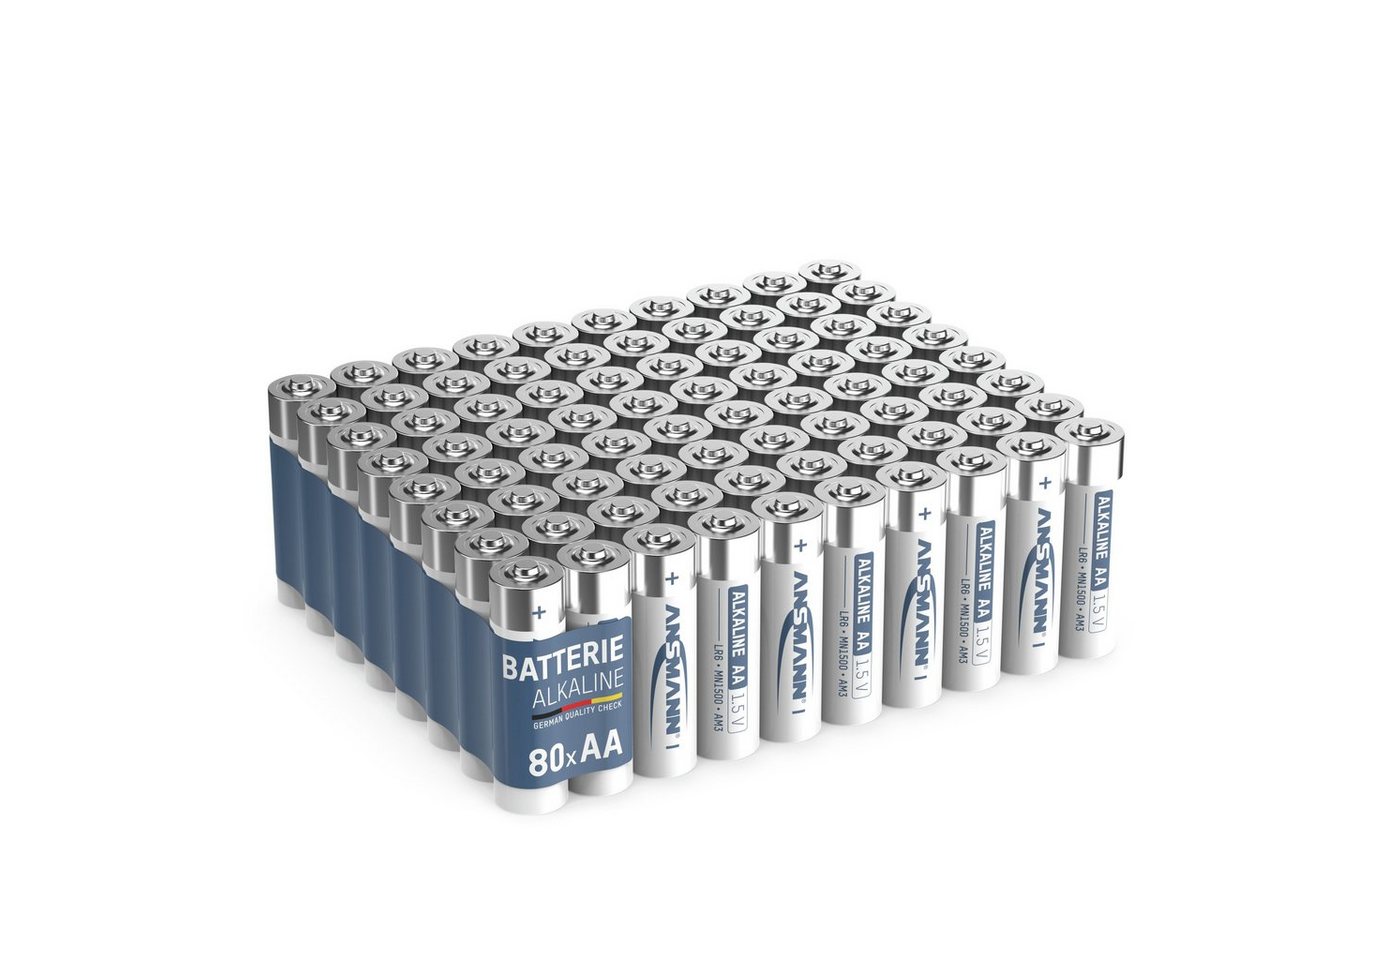 ANSMANN AG Batterien AA 80 Stück, Alkaline Mignon Batterie, für Lichterkette uvm. Batterie von ANSMANN AG